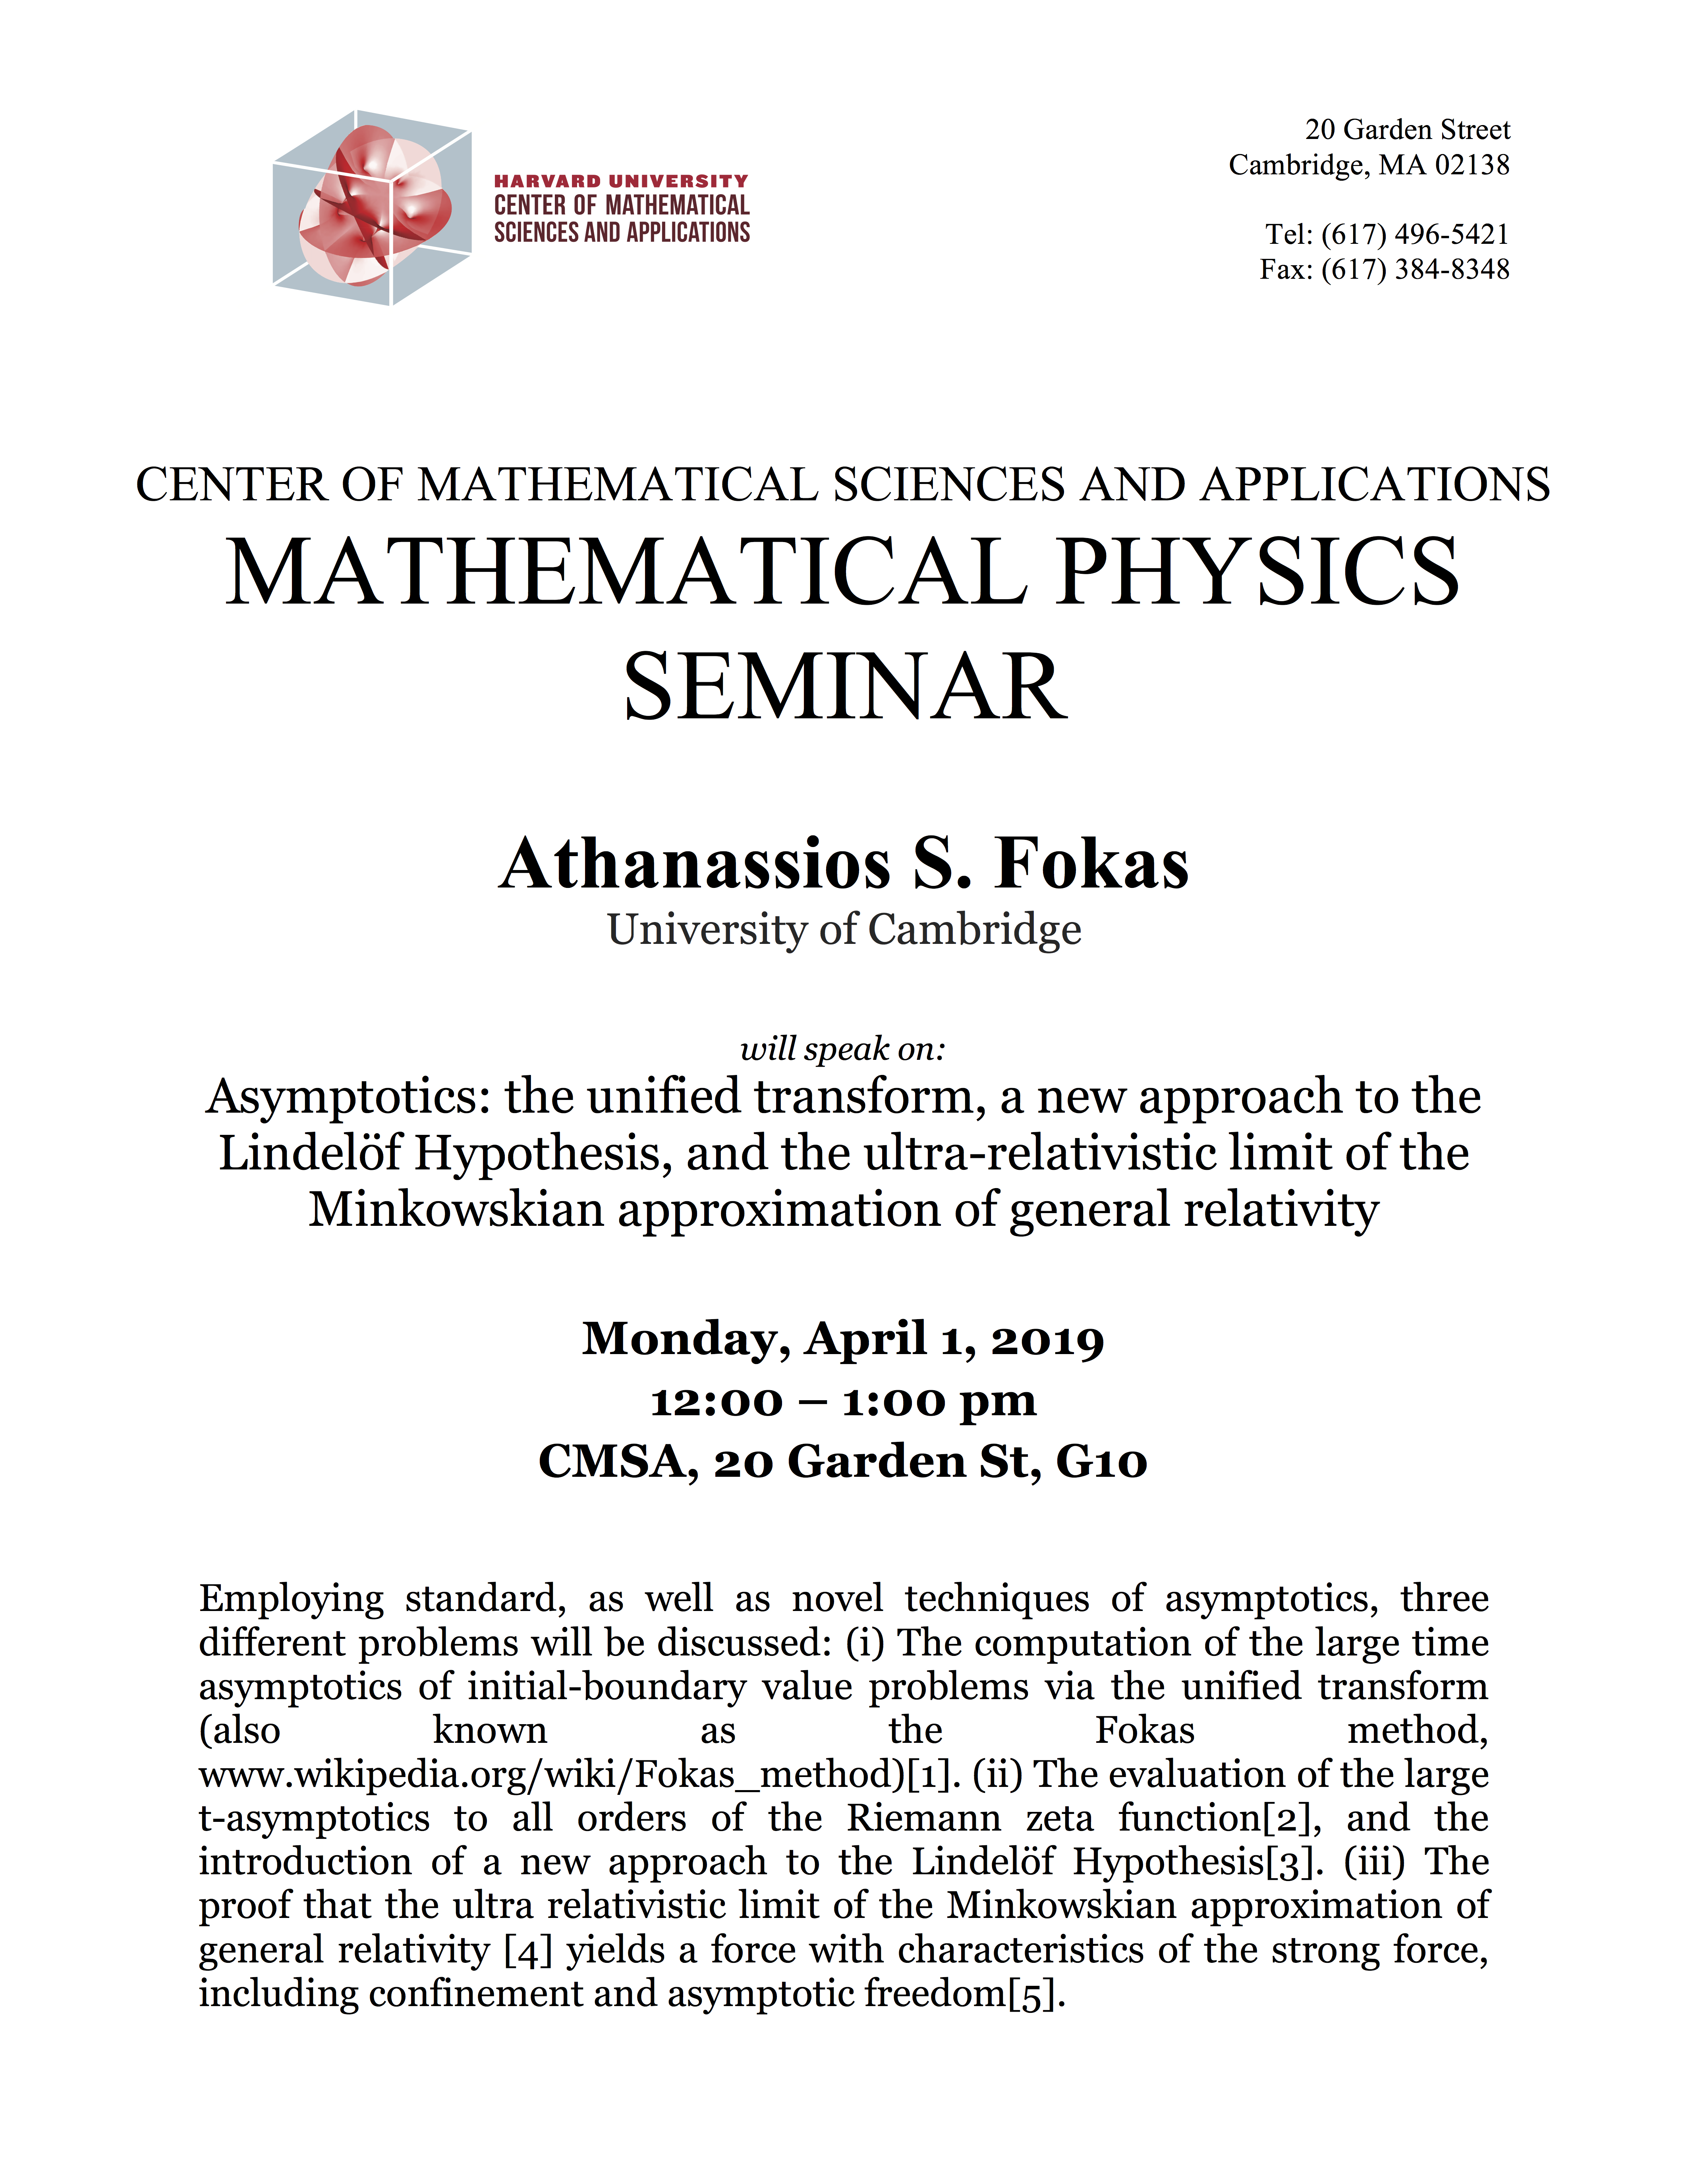 4/1/2019 Mathematical Physics Seminar